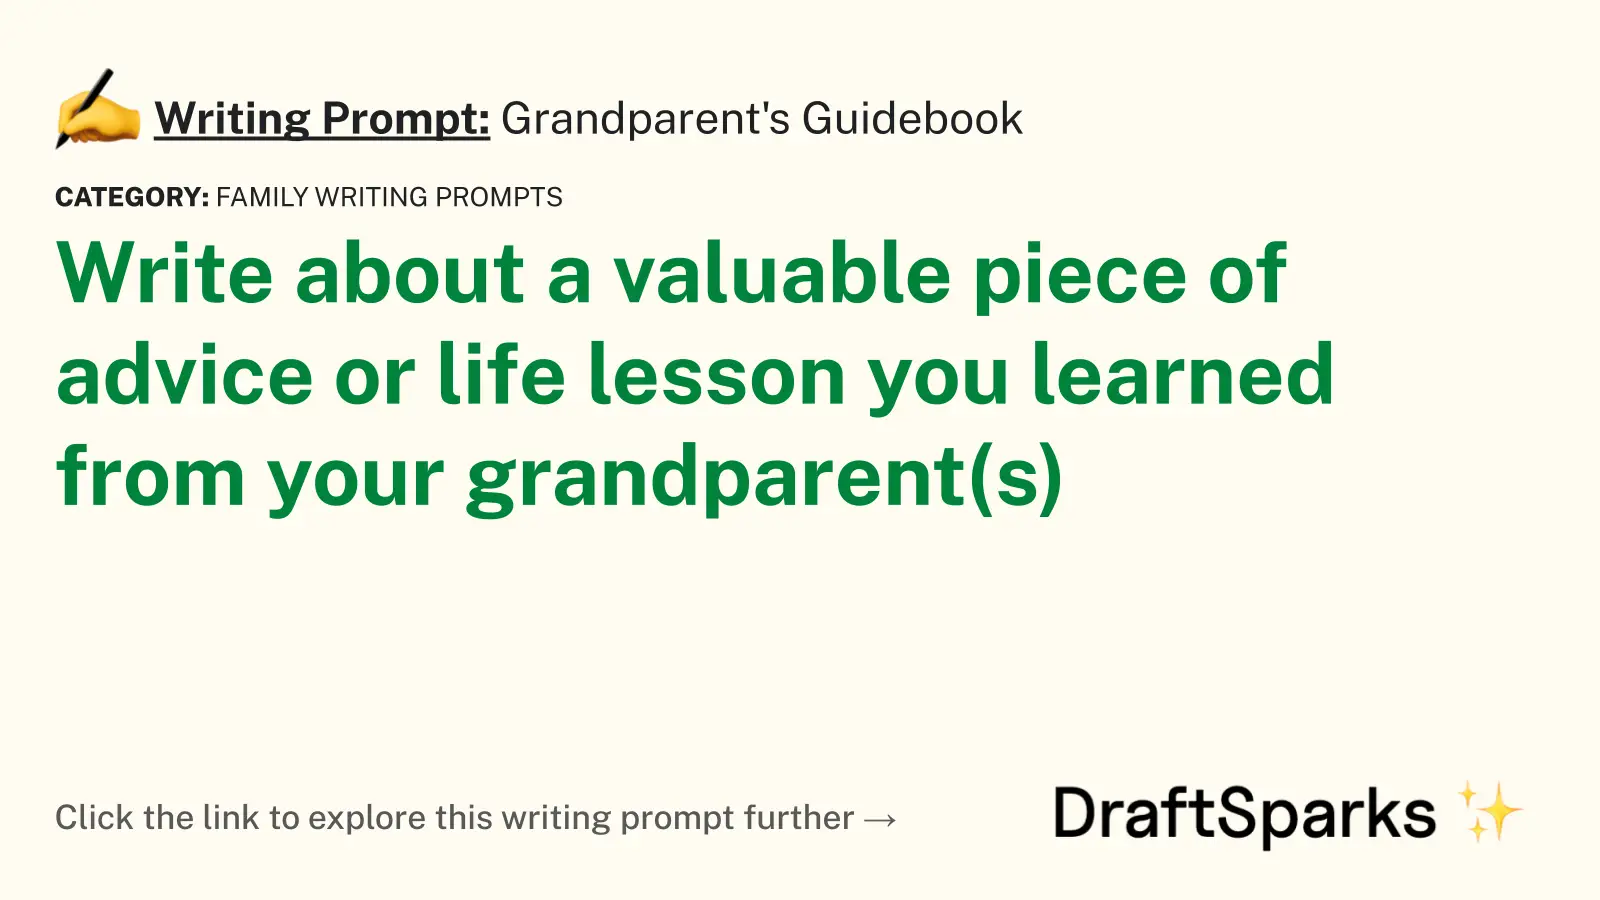 Grandparent’s Guidebook